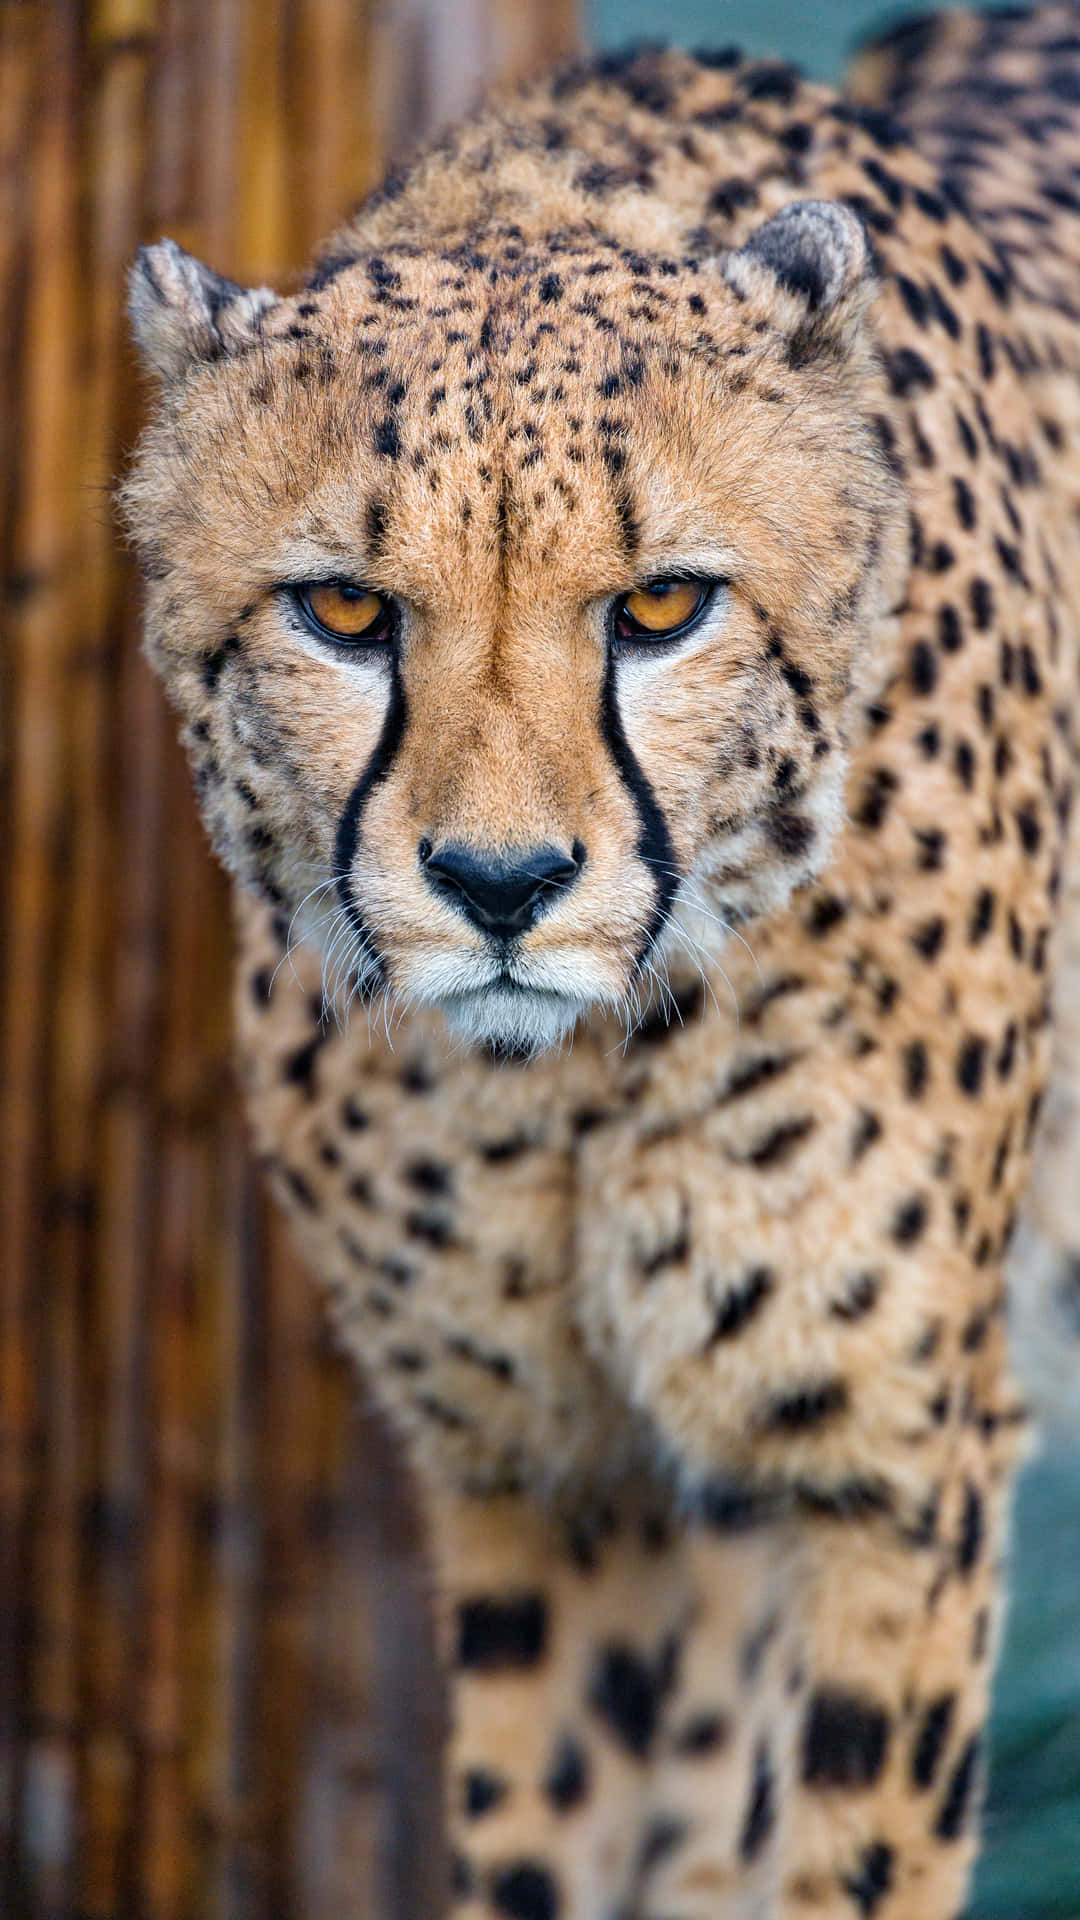 Cheetah At Rest in its Natural Habitat Wallpaper